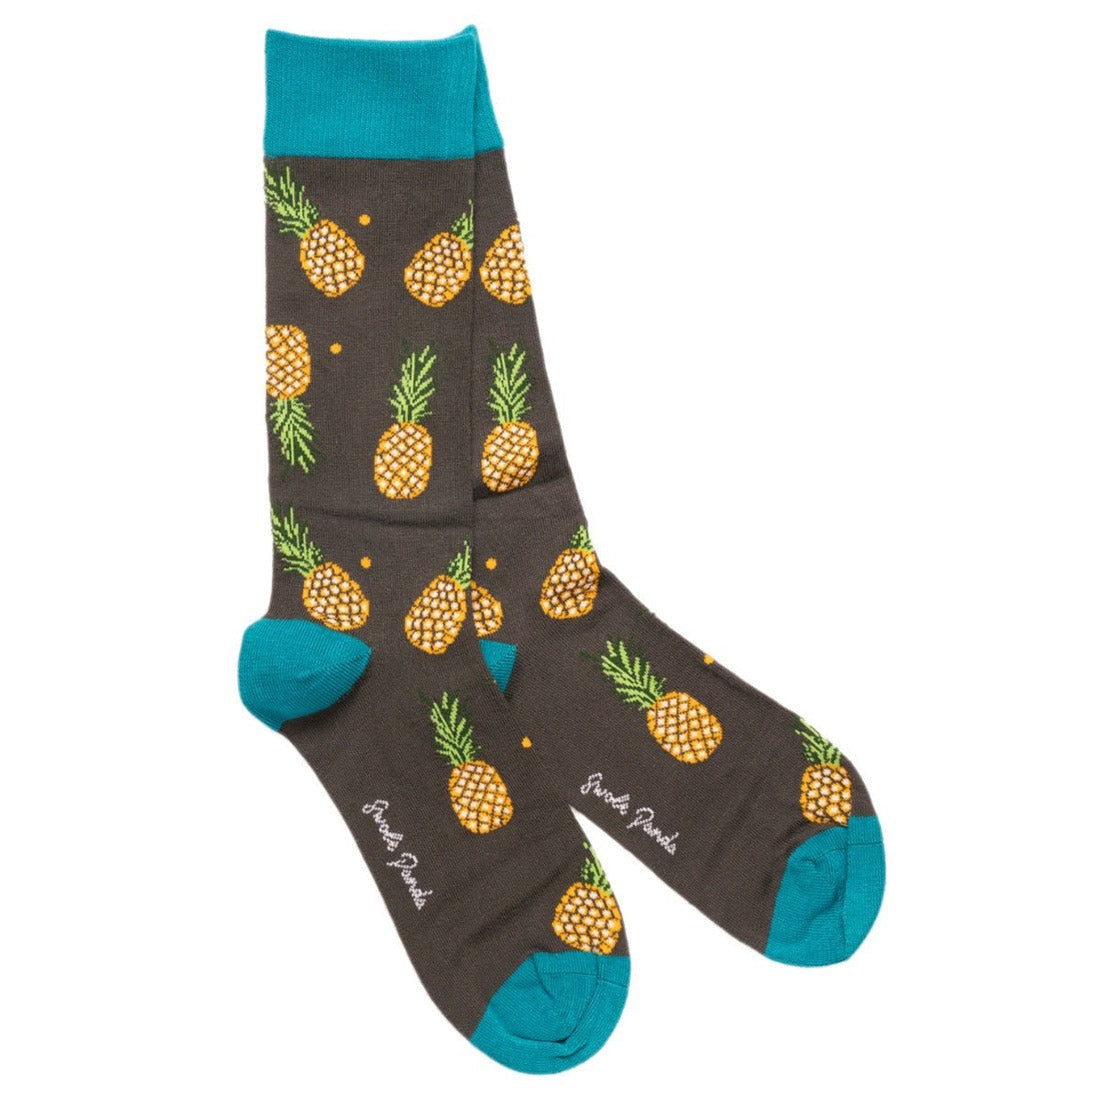 Swole Panda Socks - Pineapples